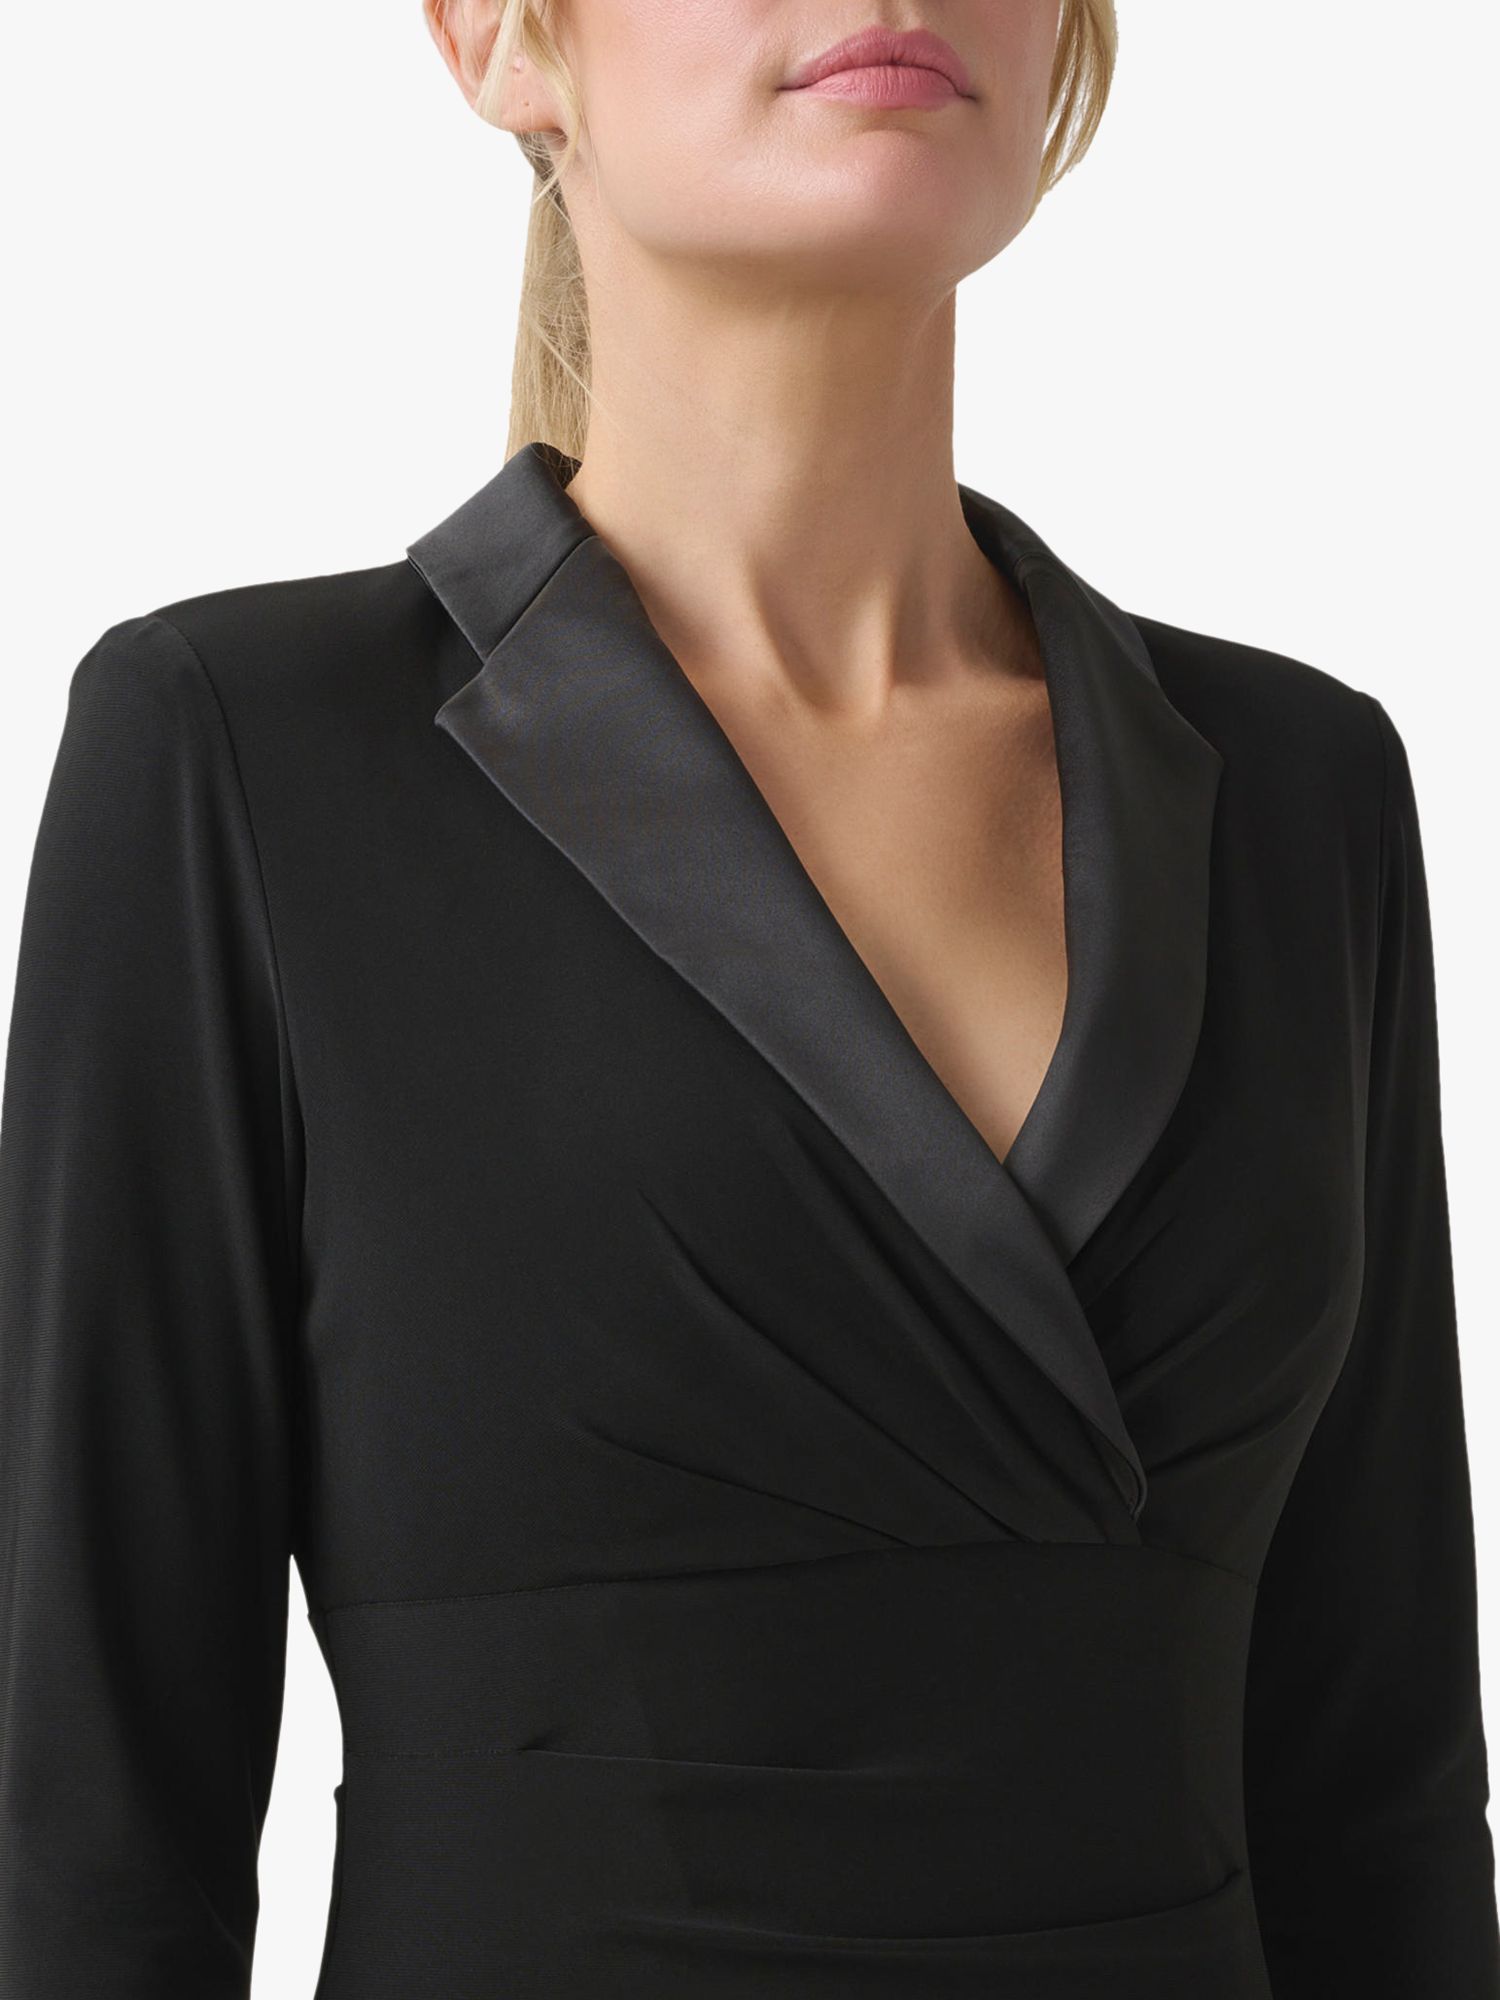 Buy Adrianna Papell Jersey Tuxedo Dress, Black Online at johnlewis.com